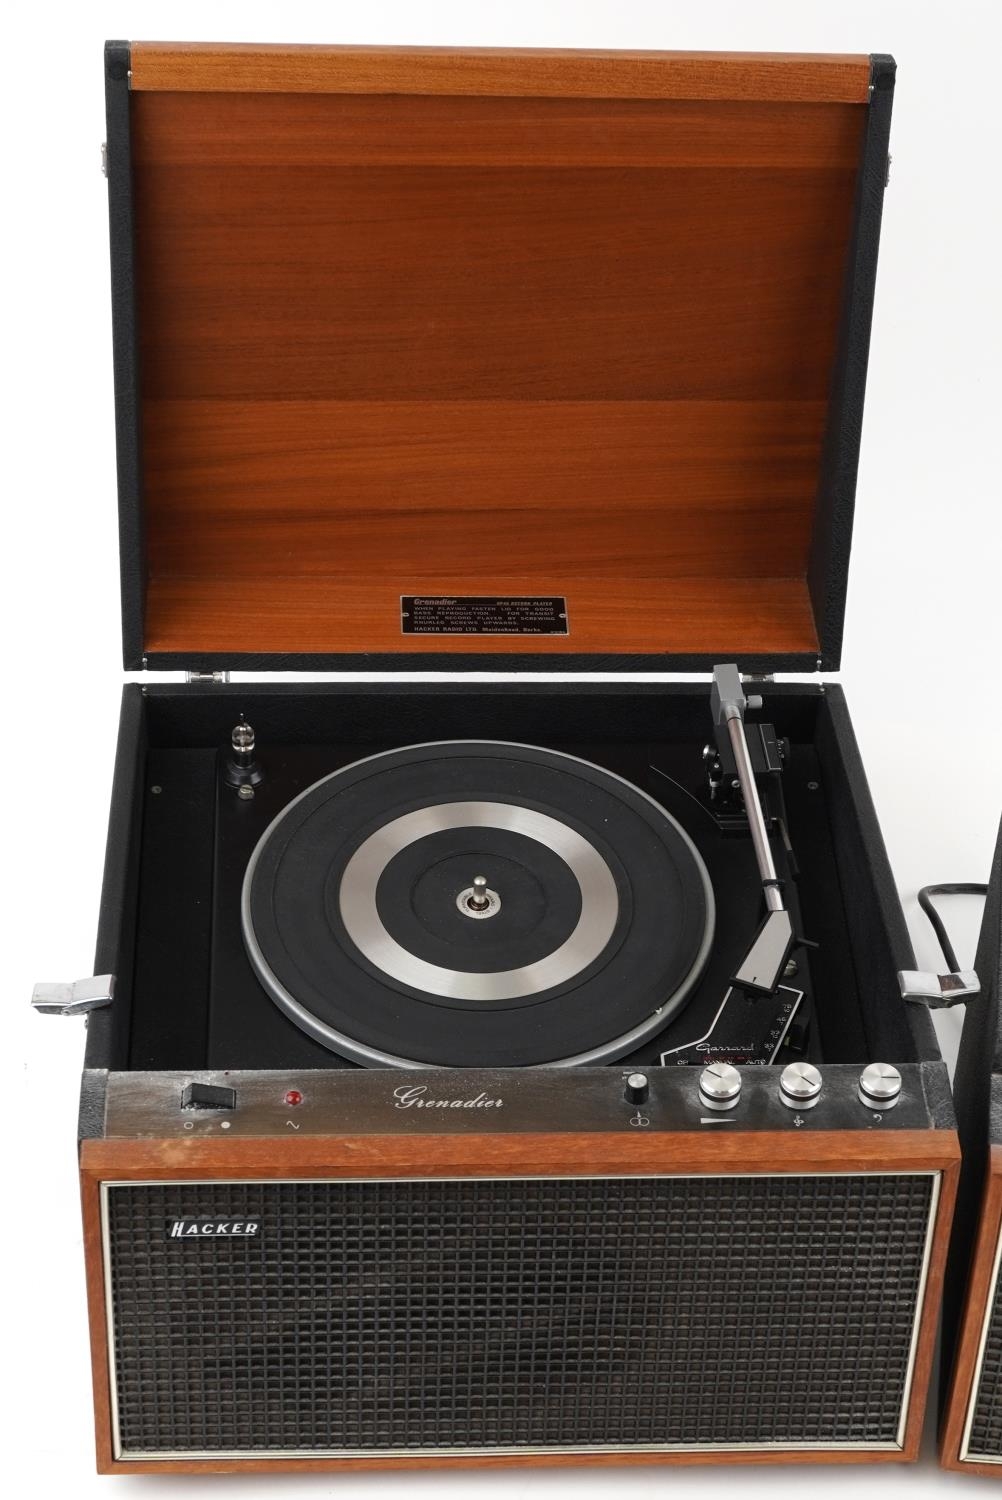 Vintage teak Hacker Grenadier record player, model SP25 MK111 and stereo amplifier model GP45, the - Image 2 of 8